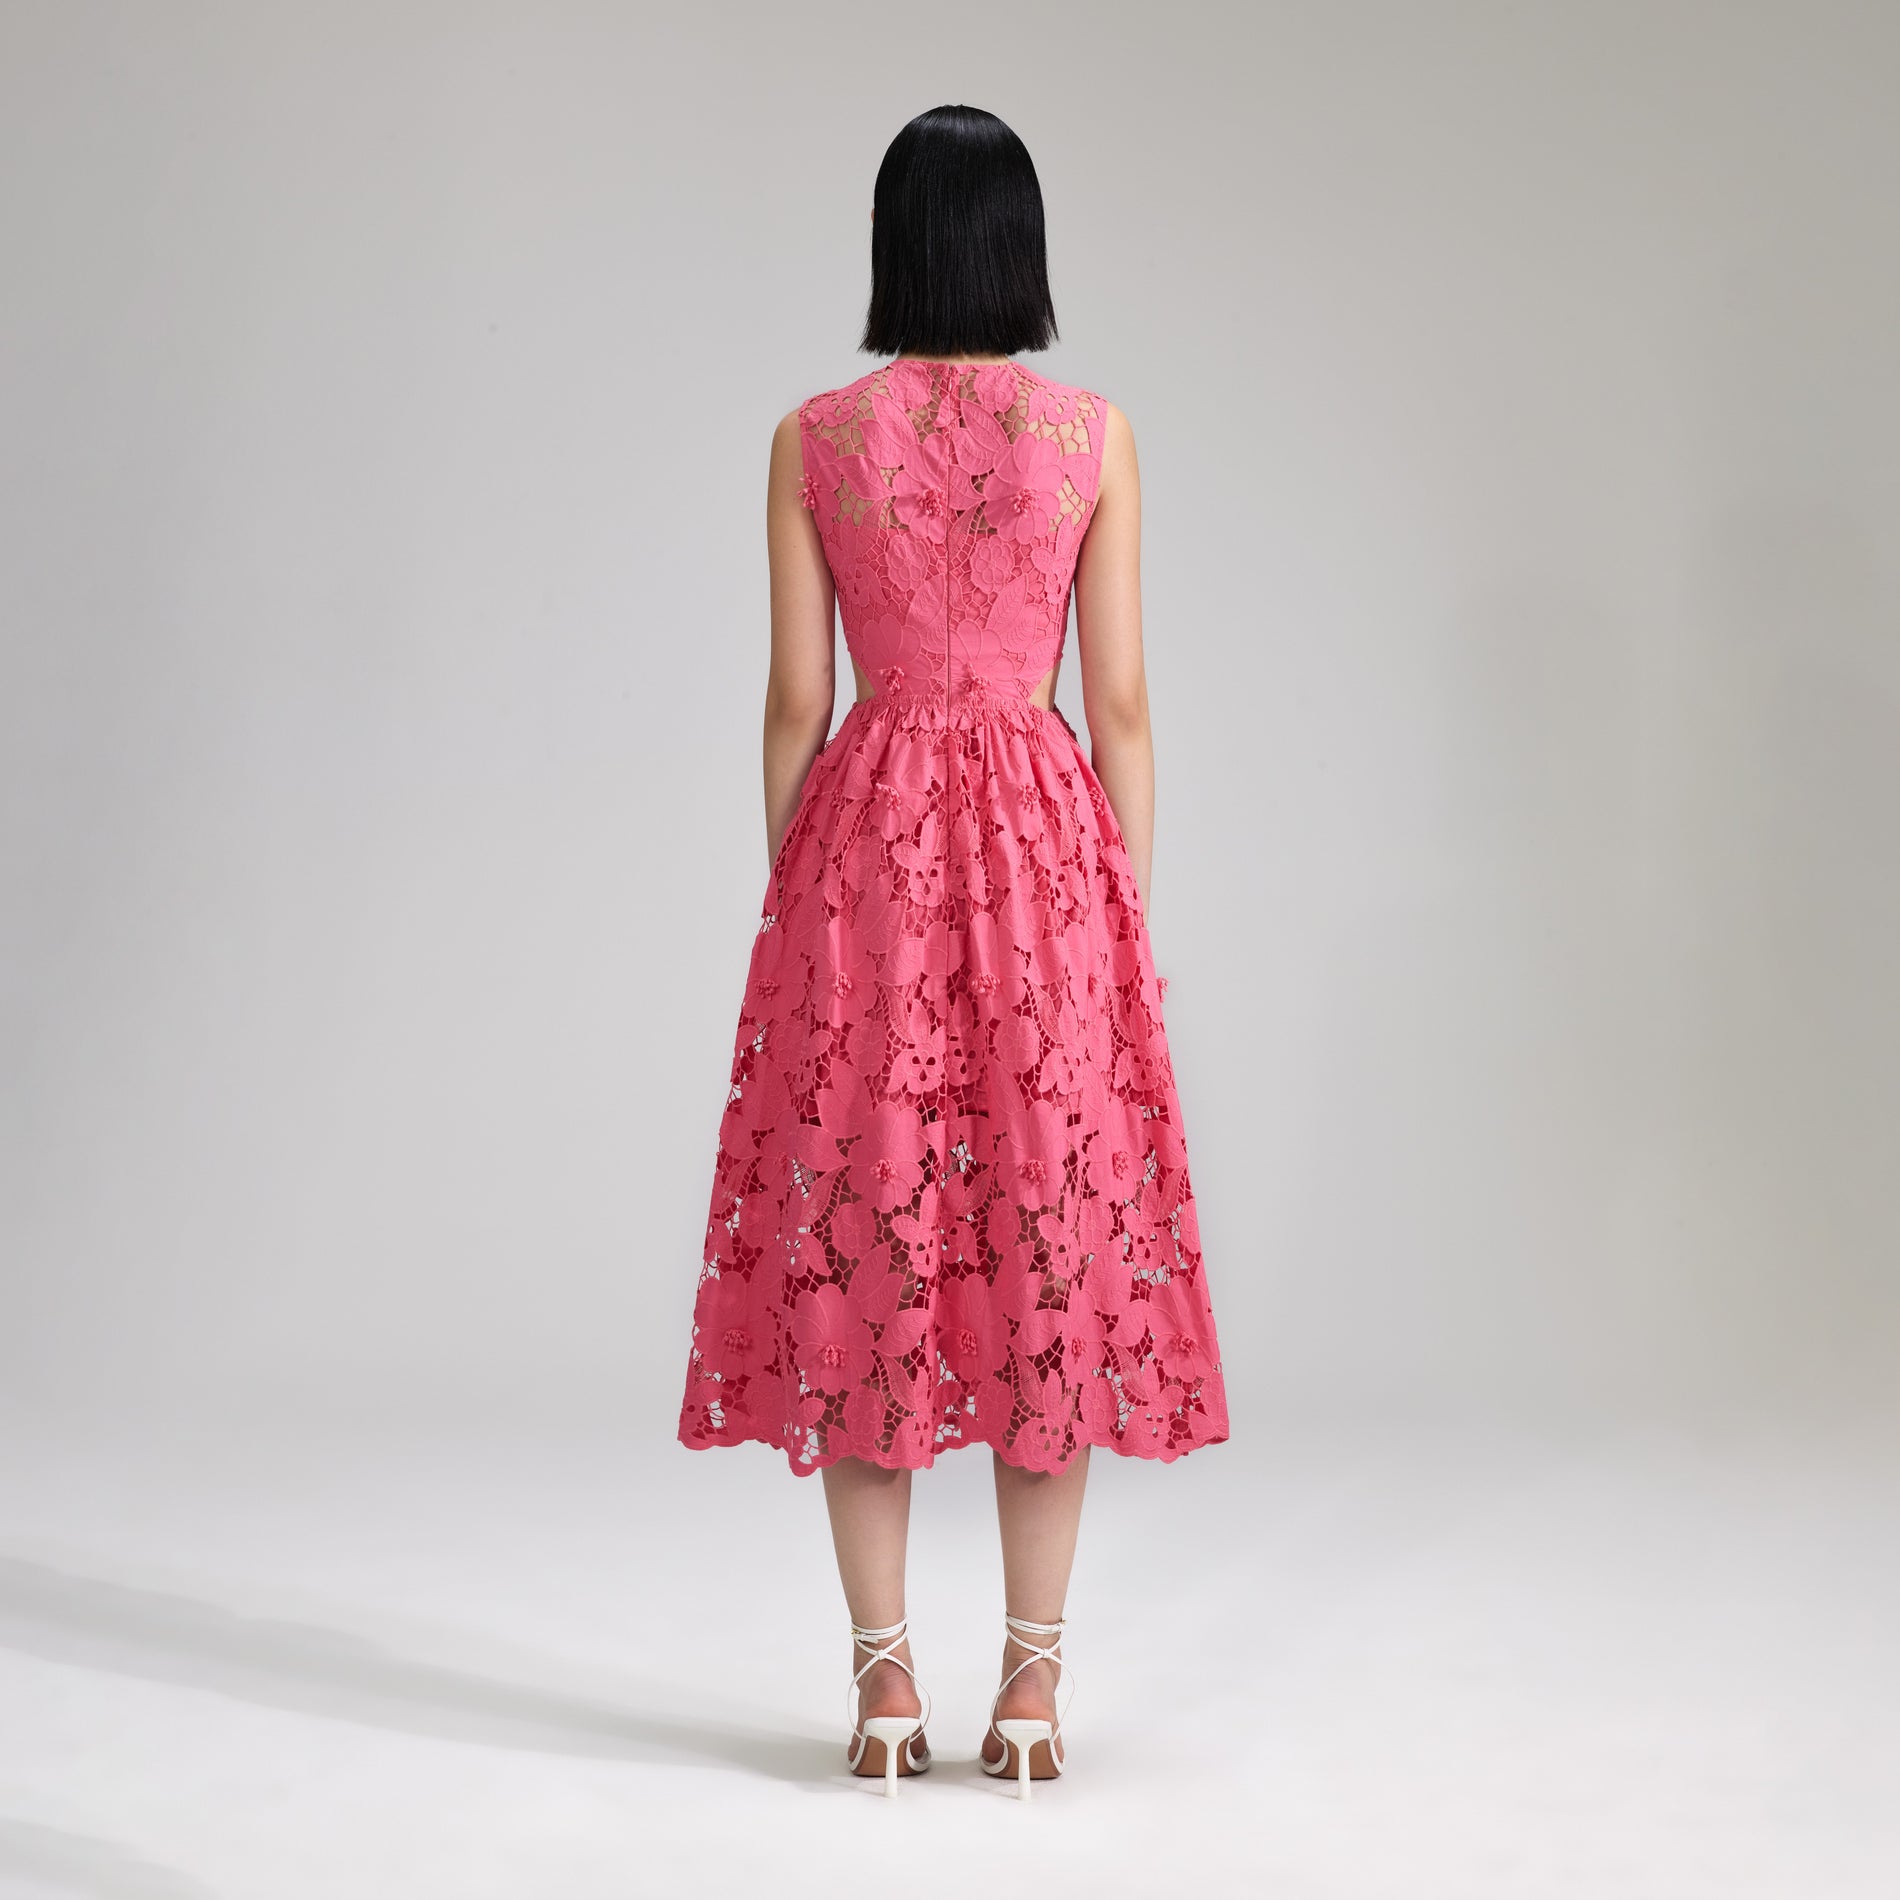 A woman wearing the Pink 3D Cotton Lace Midi Dress